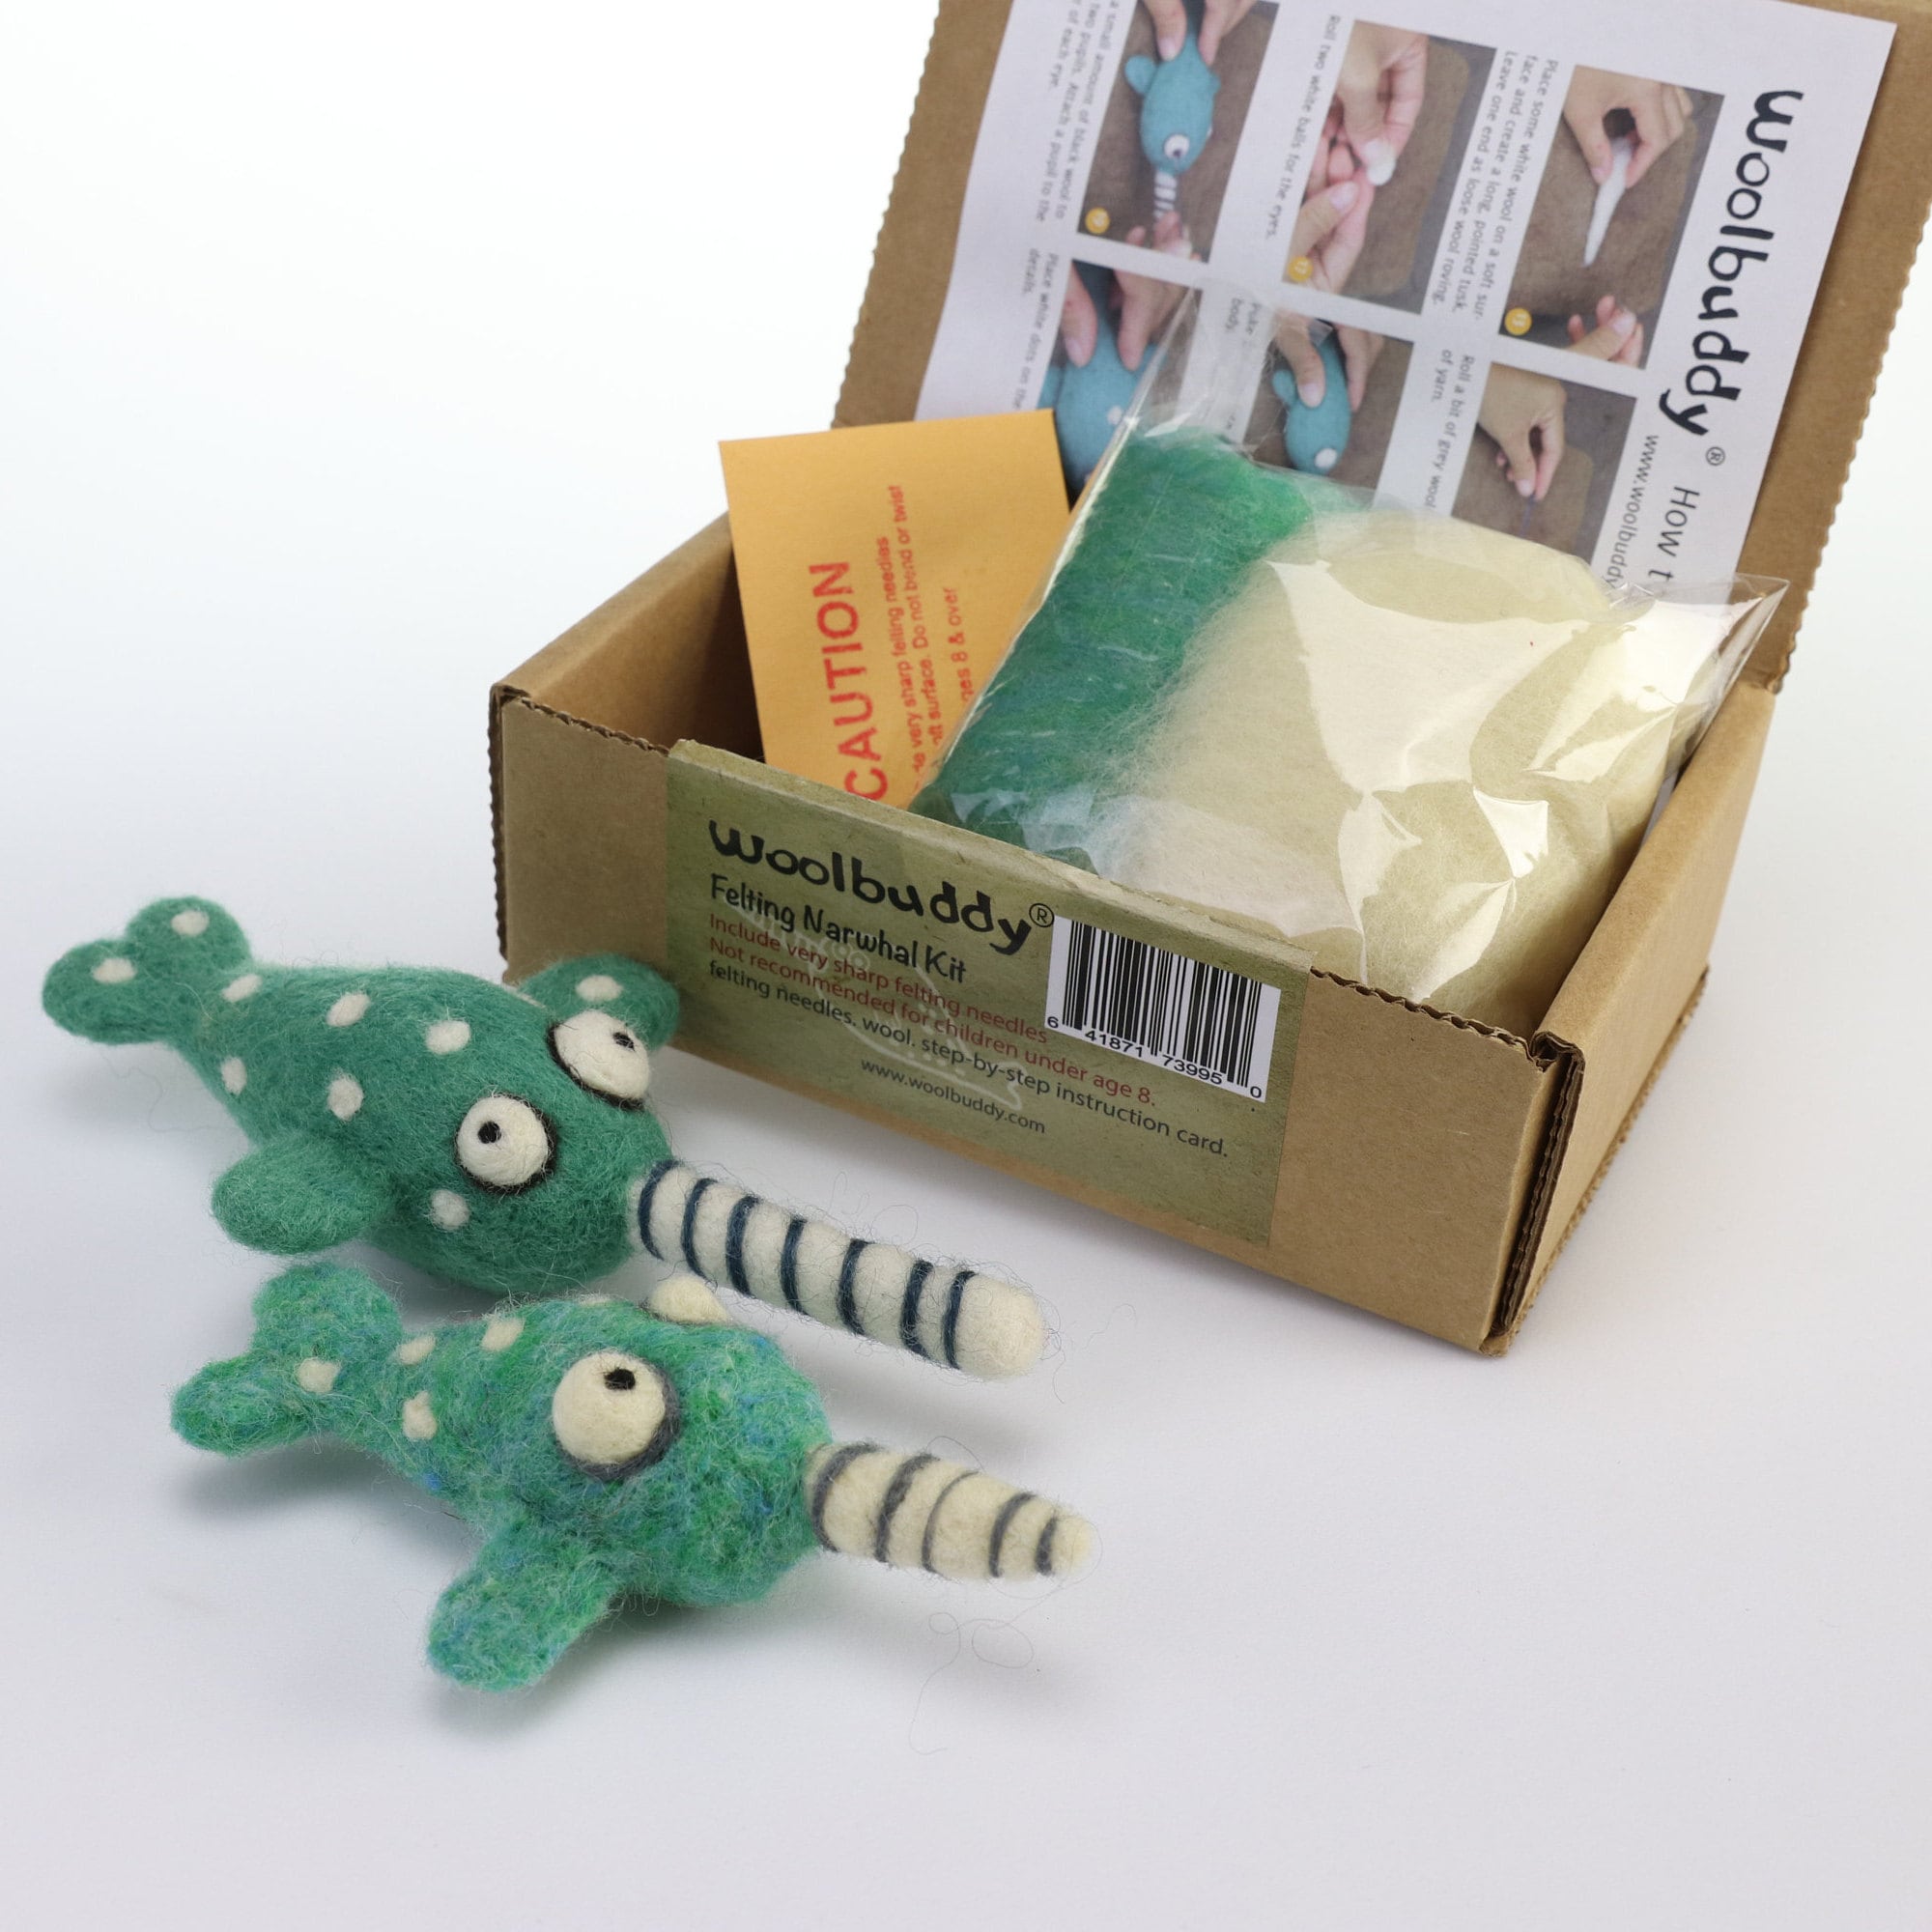 Woolbuddy: Best Needle felting kits designed for Beginners